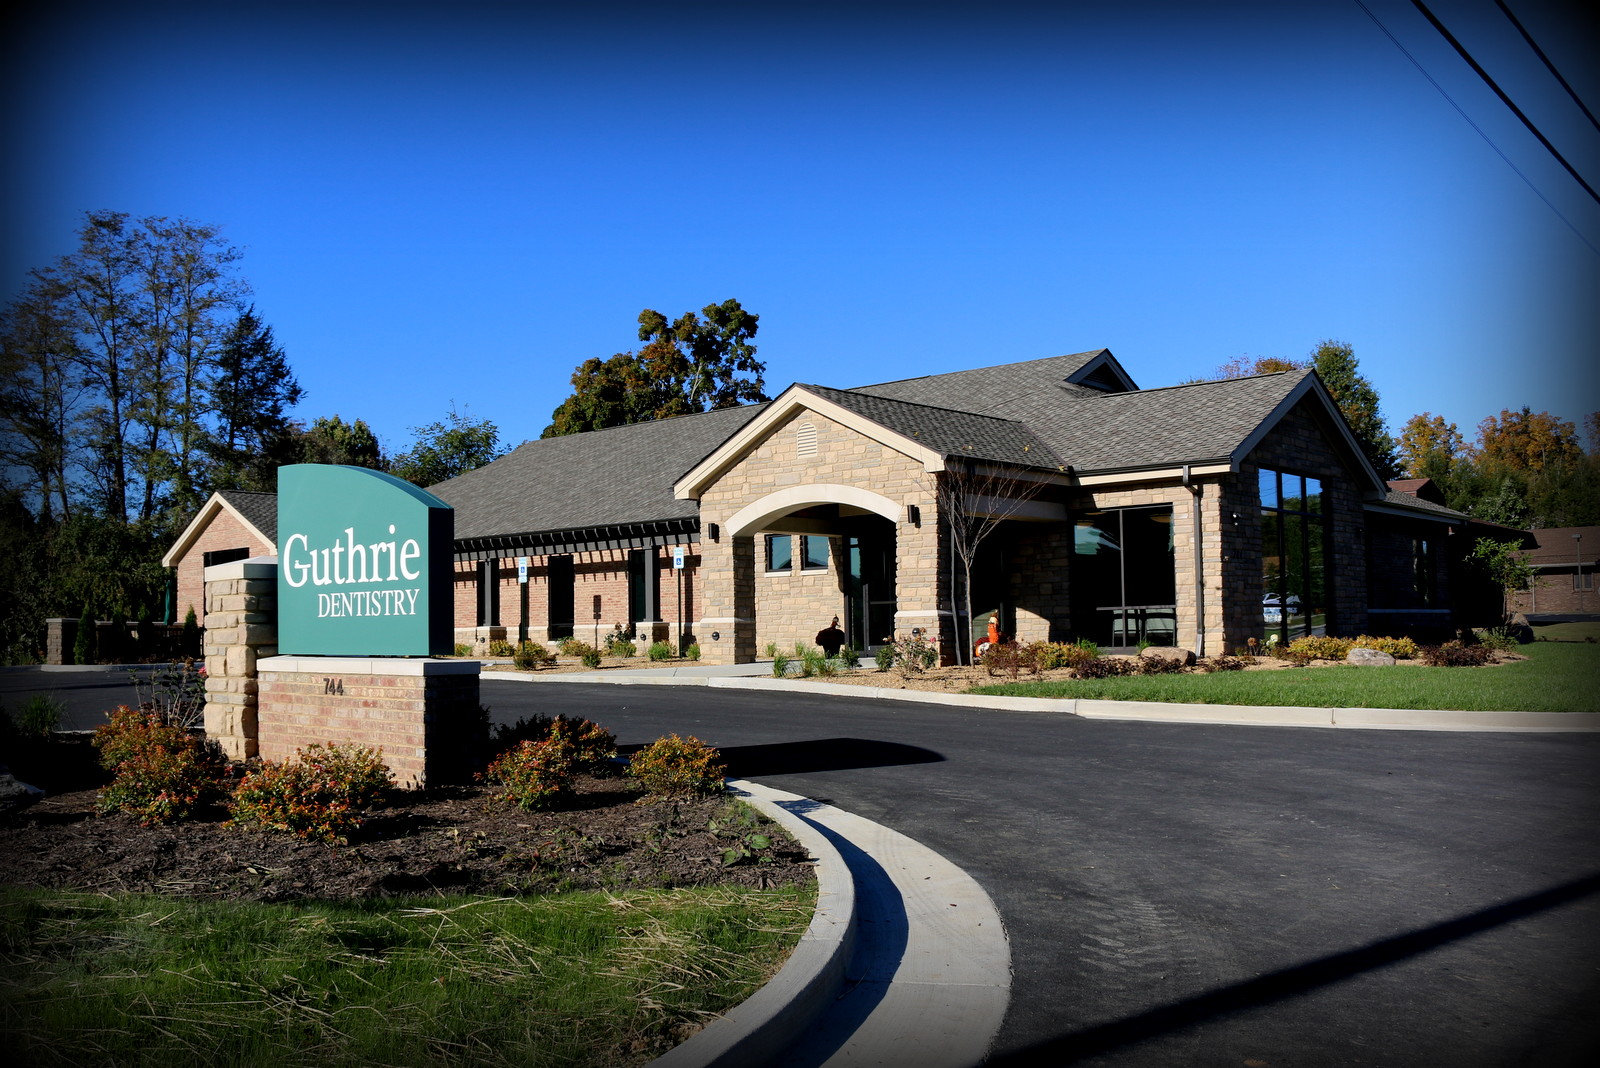 Guthrie Dentistry Building